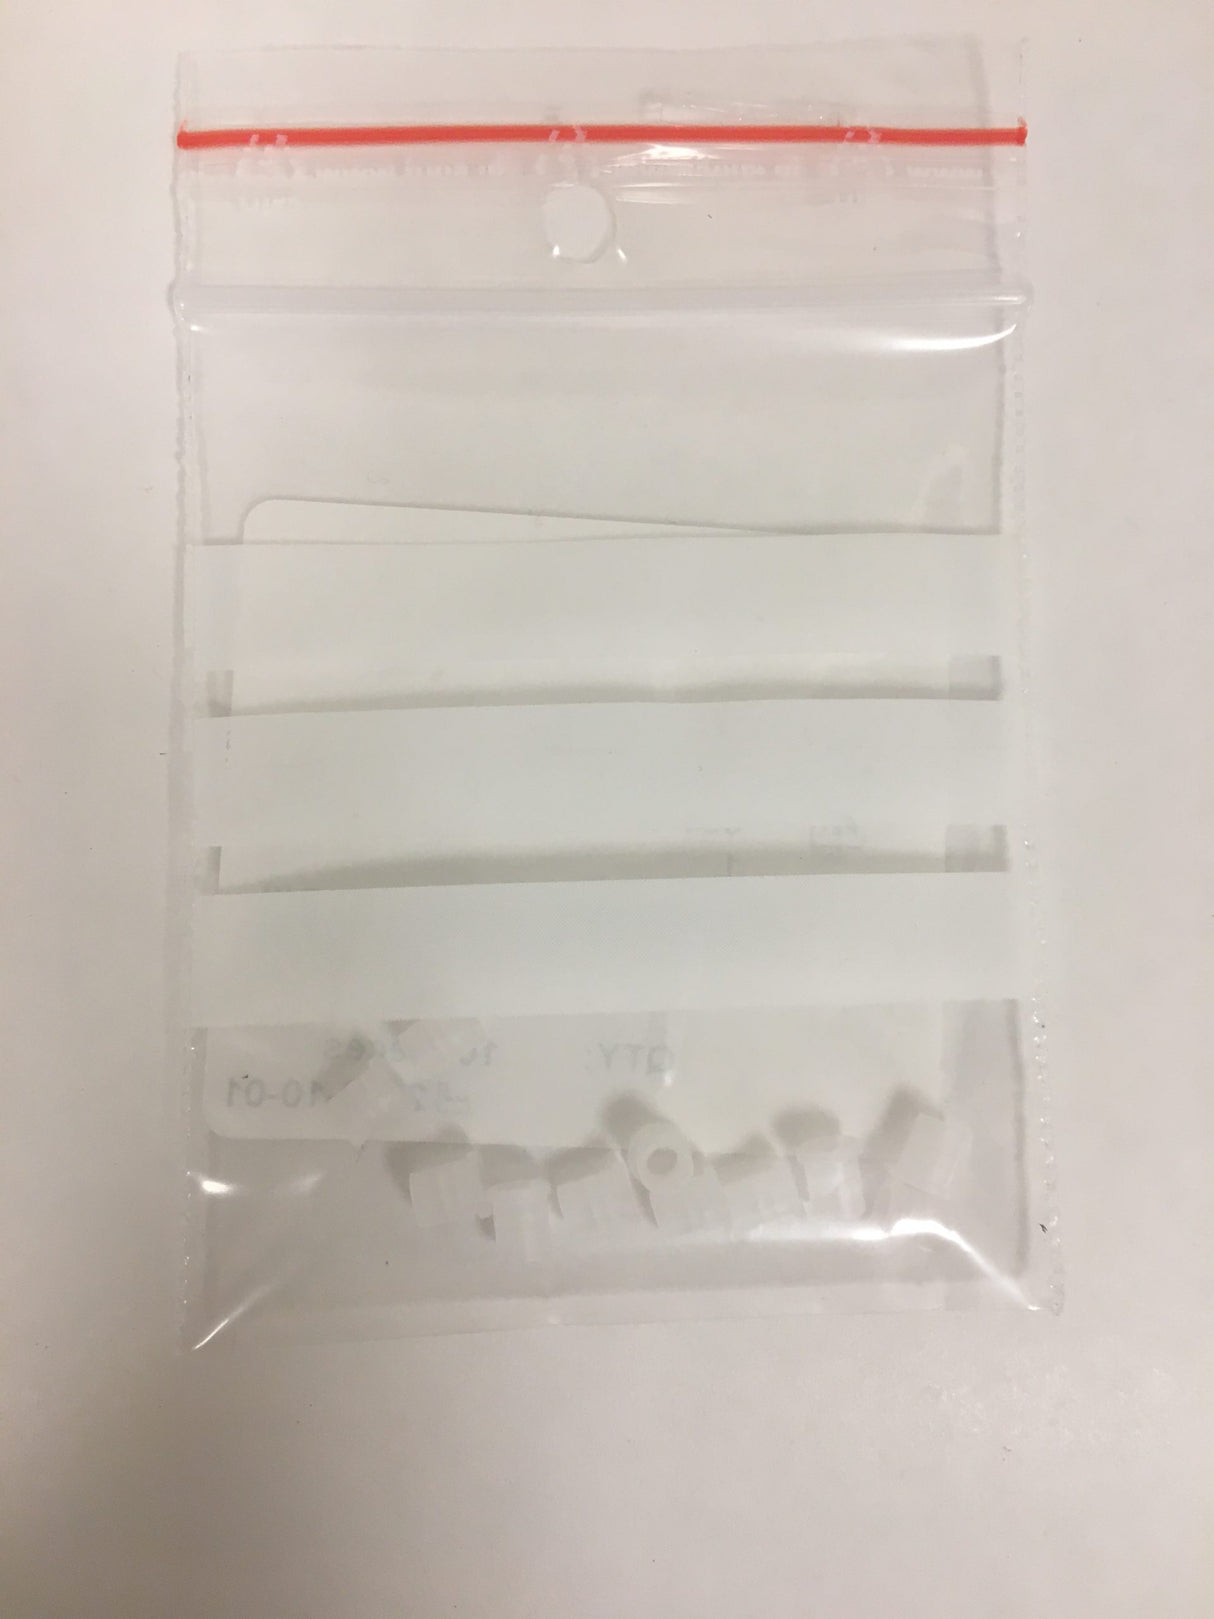 Filterhulsjes transparant Phonak schaaltjes 5 stuks